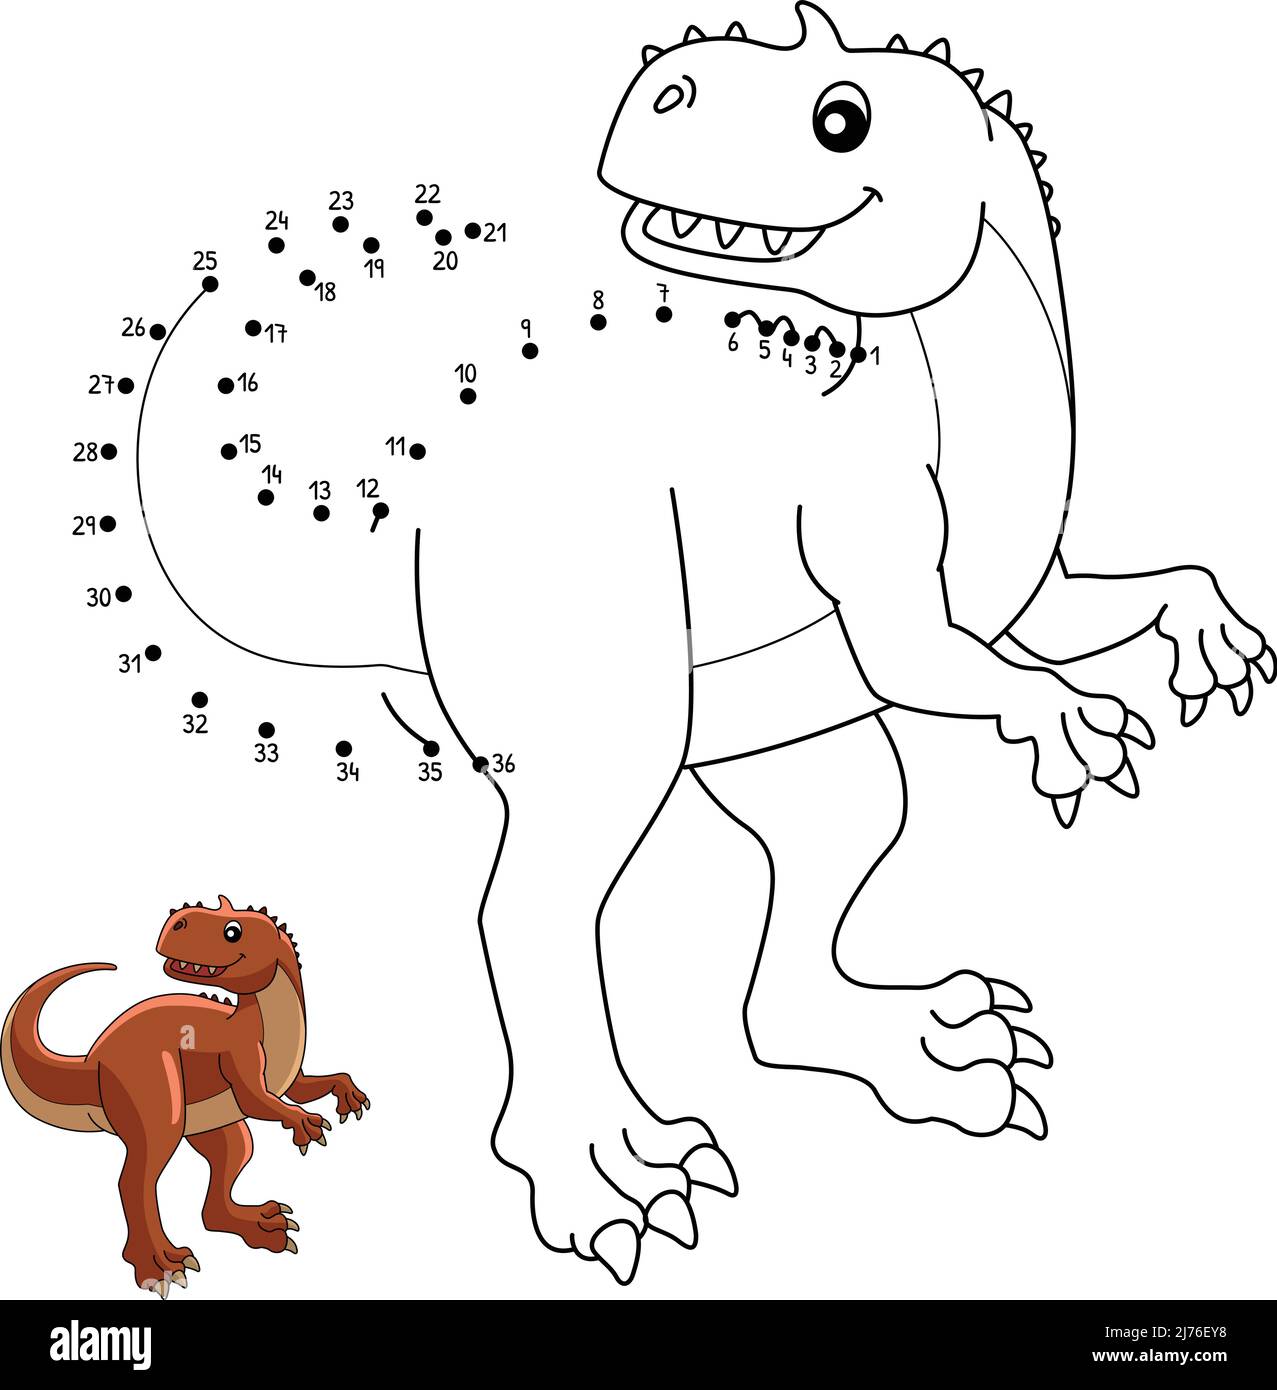 Dot to dot rajasaurus dinosaur coloring isolated stock vector image art